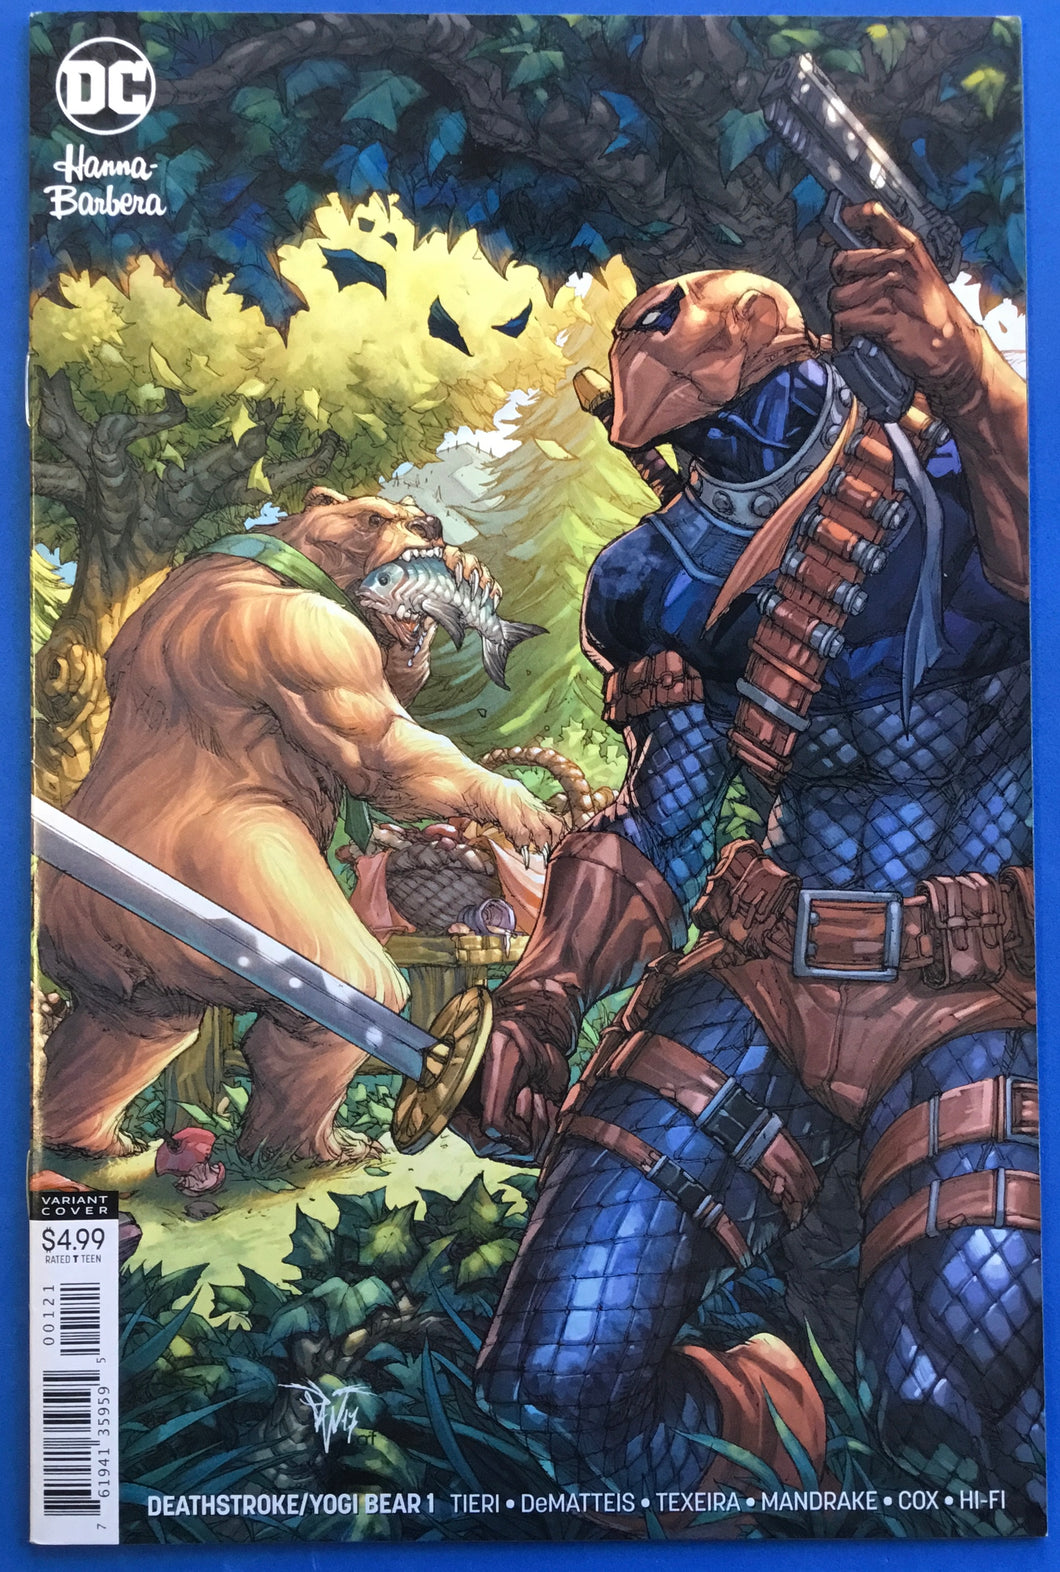 Deathstroke/Yogi Bear No. #1 2018 DC Comics